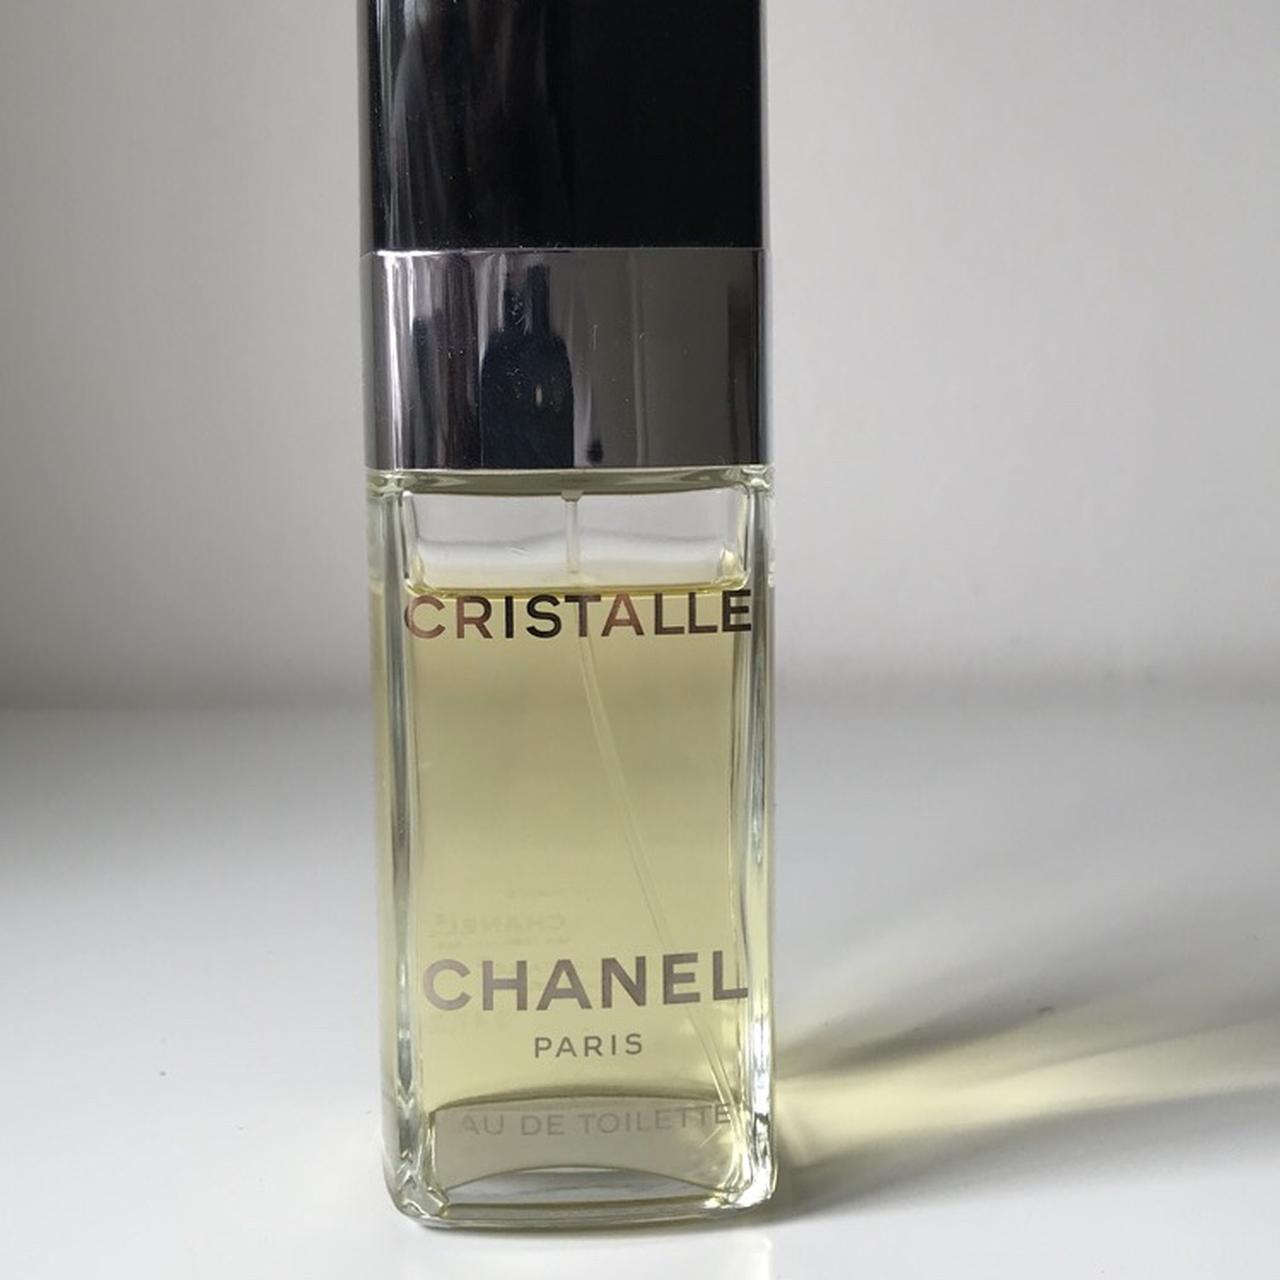 Chanel Cristalle Eau De Toilette 100ml Only used a - Depop